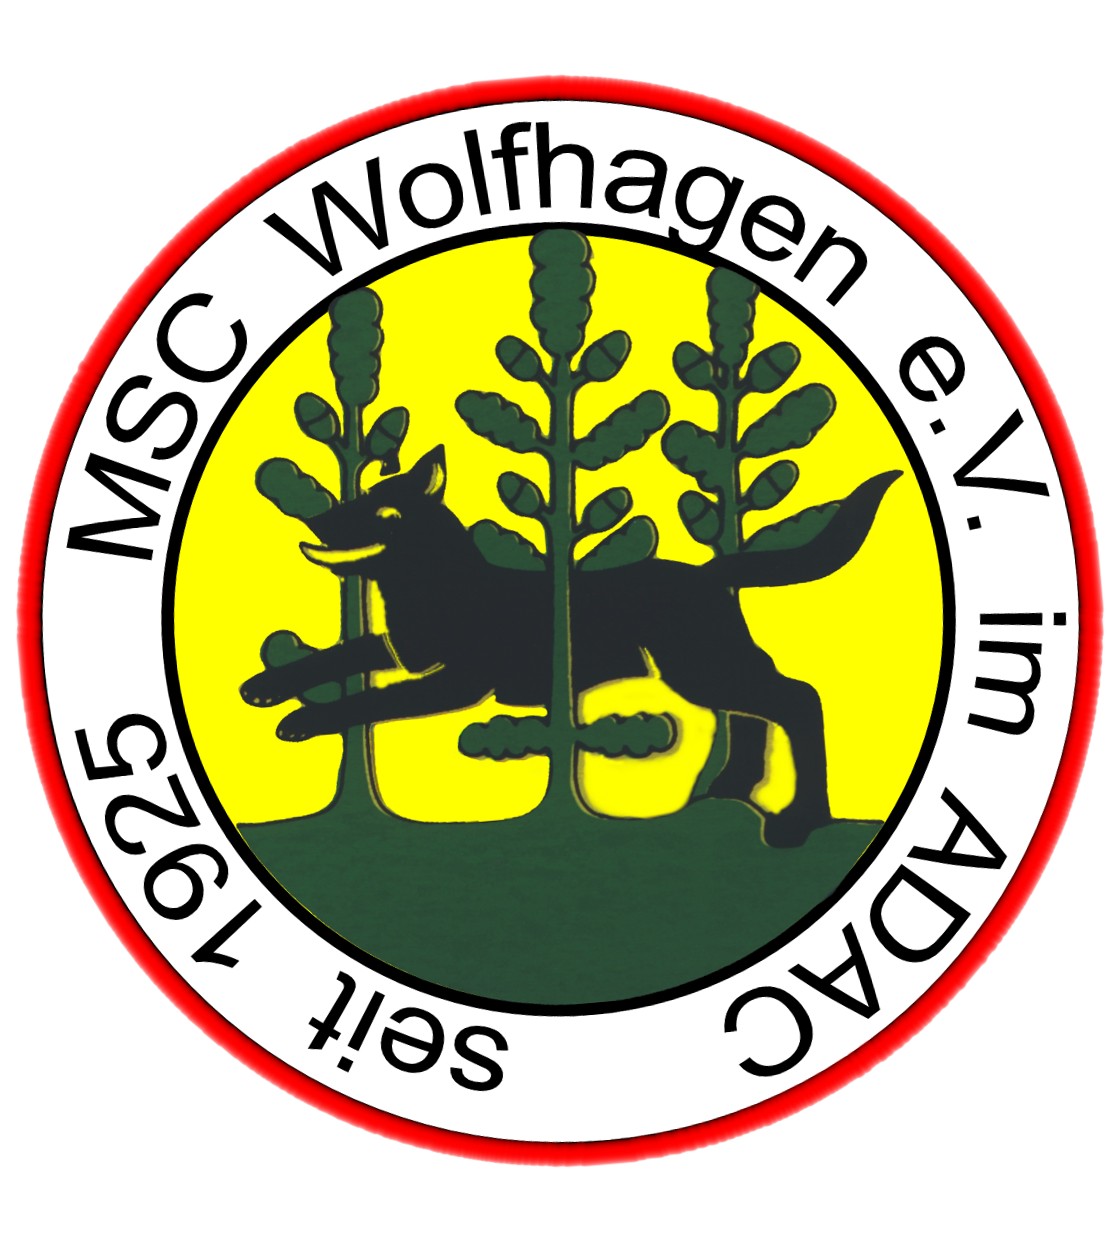 (c) Msc-wolfhagen.de